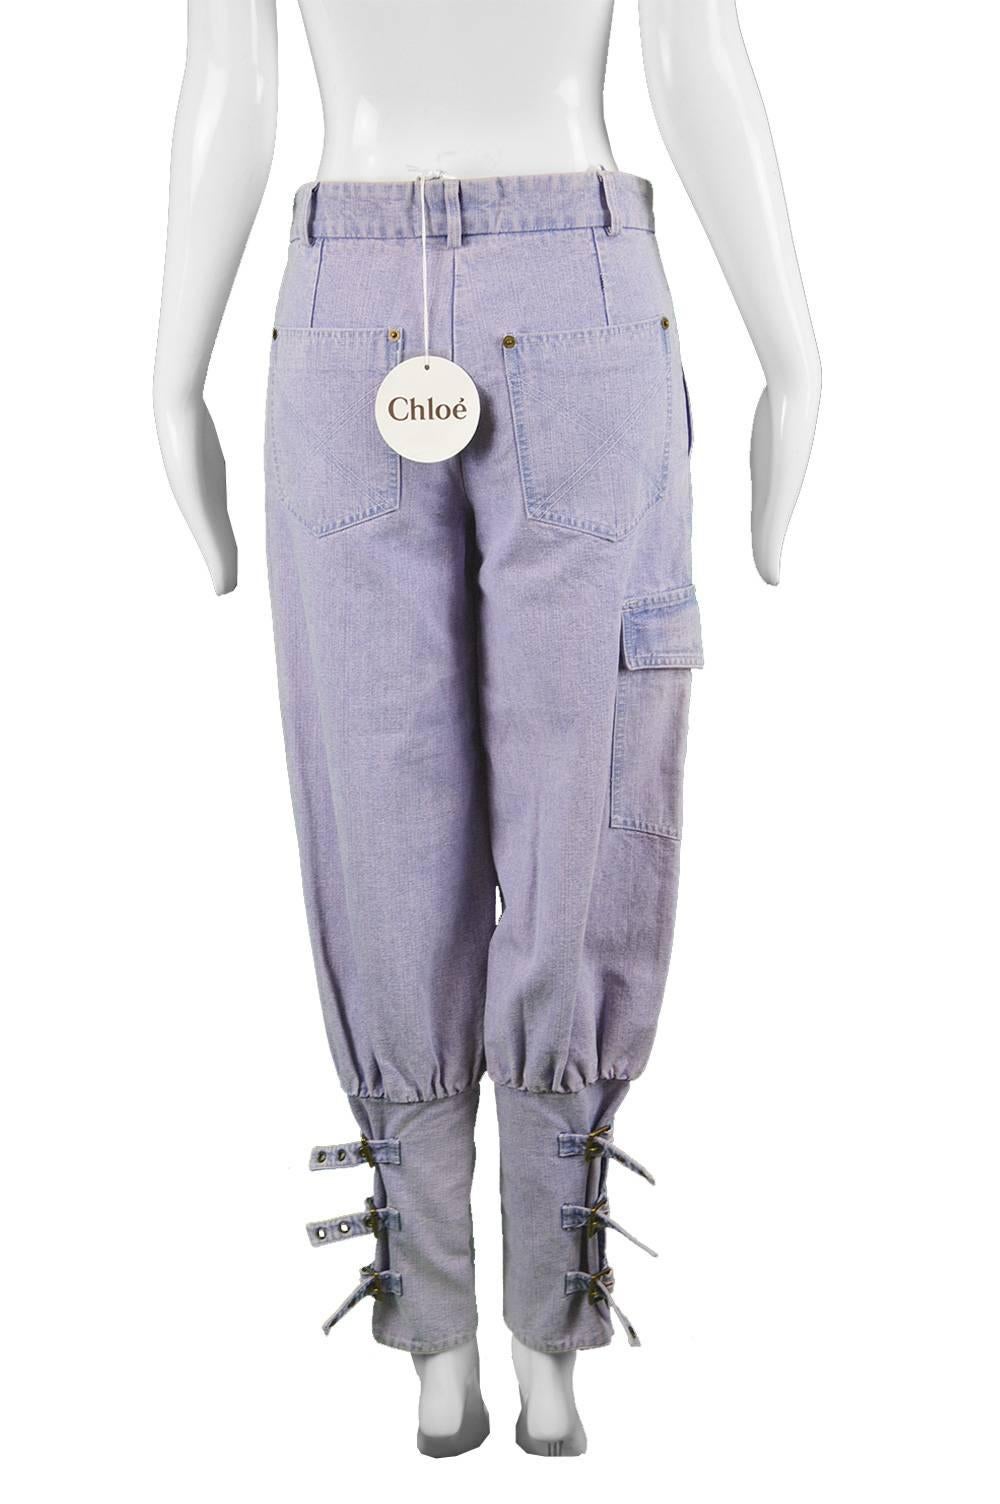 Chloé by Phoebe Philo Blue Pastel Pink Overdyed Denim Jeans / Shorts, S / S 2002 3